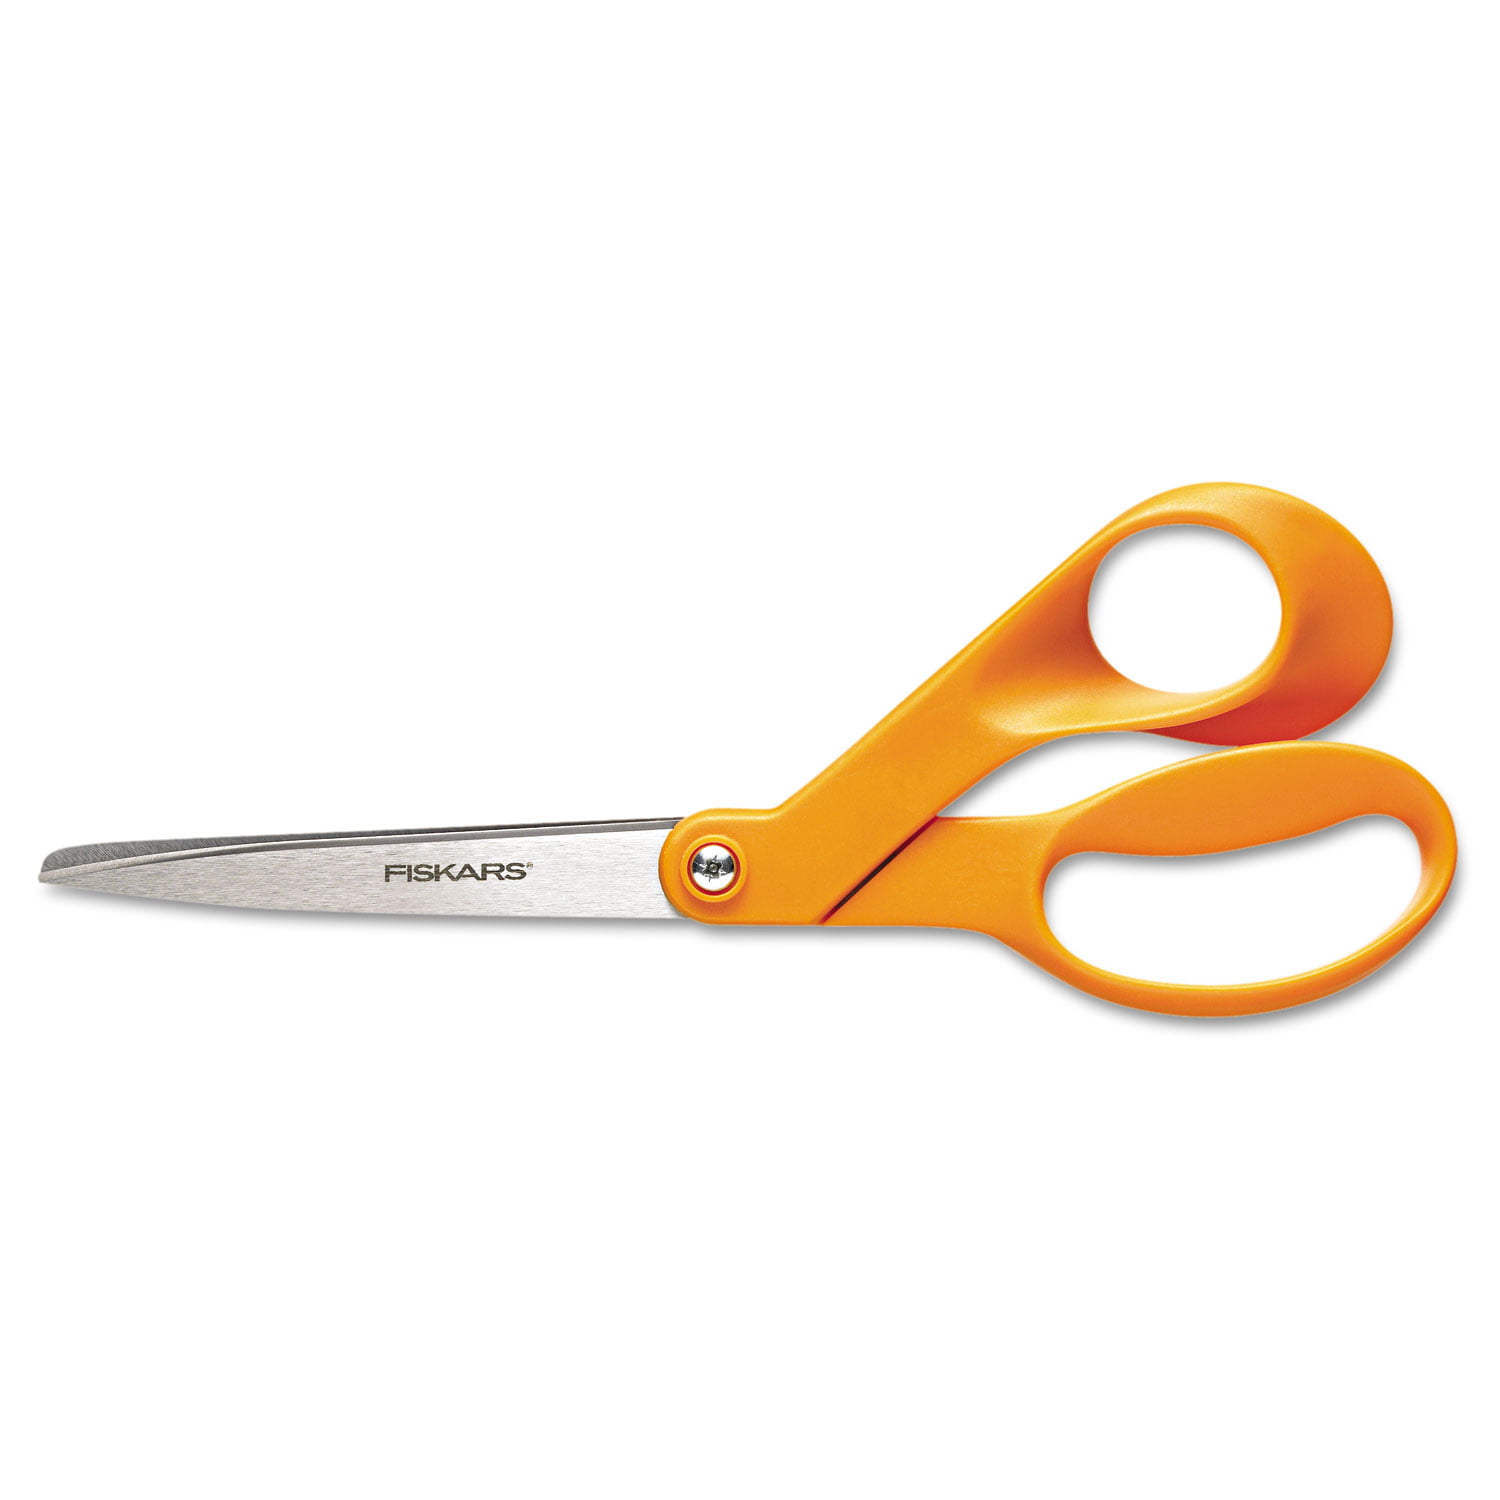 FISKARS CutWorks DESKWORKS 8 SCISSORS - Scissors - Office & School  Supplies - The Craft Shop, Inc.